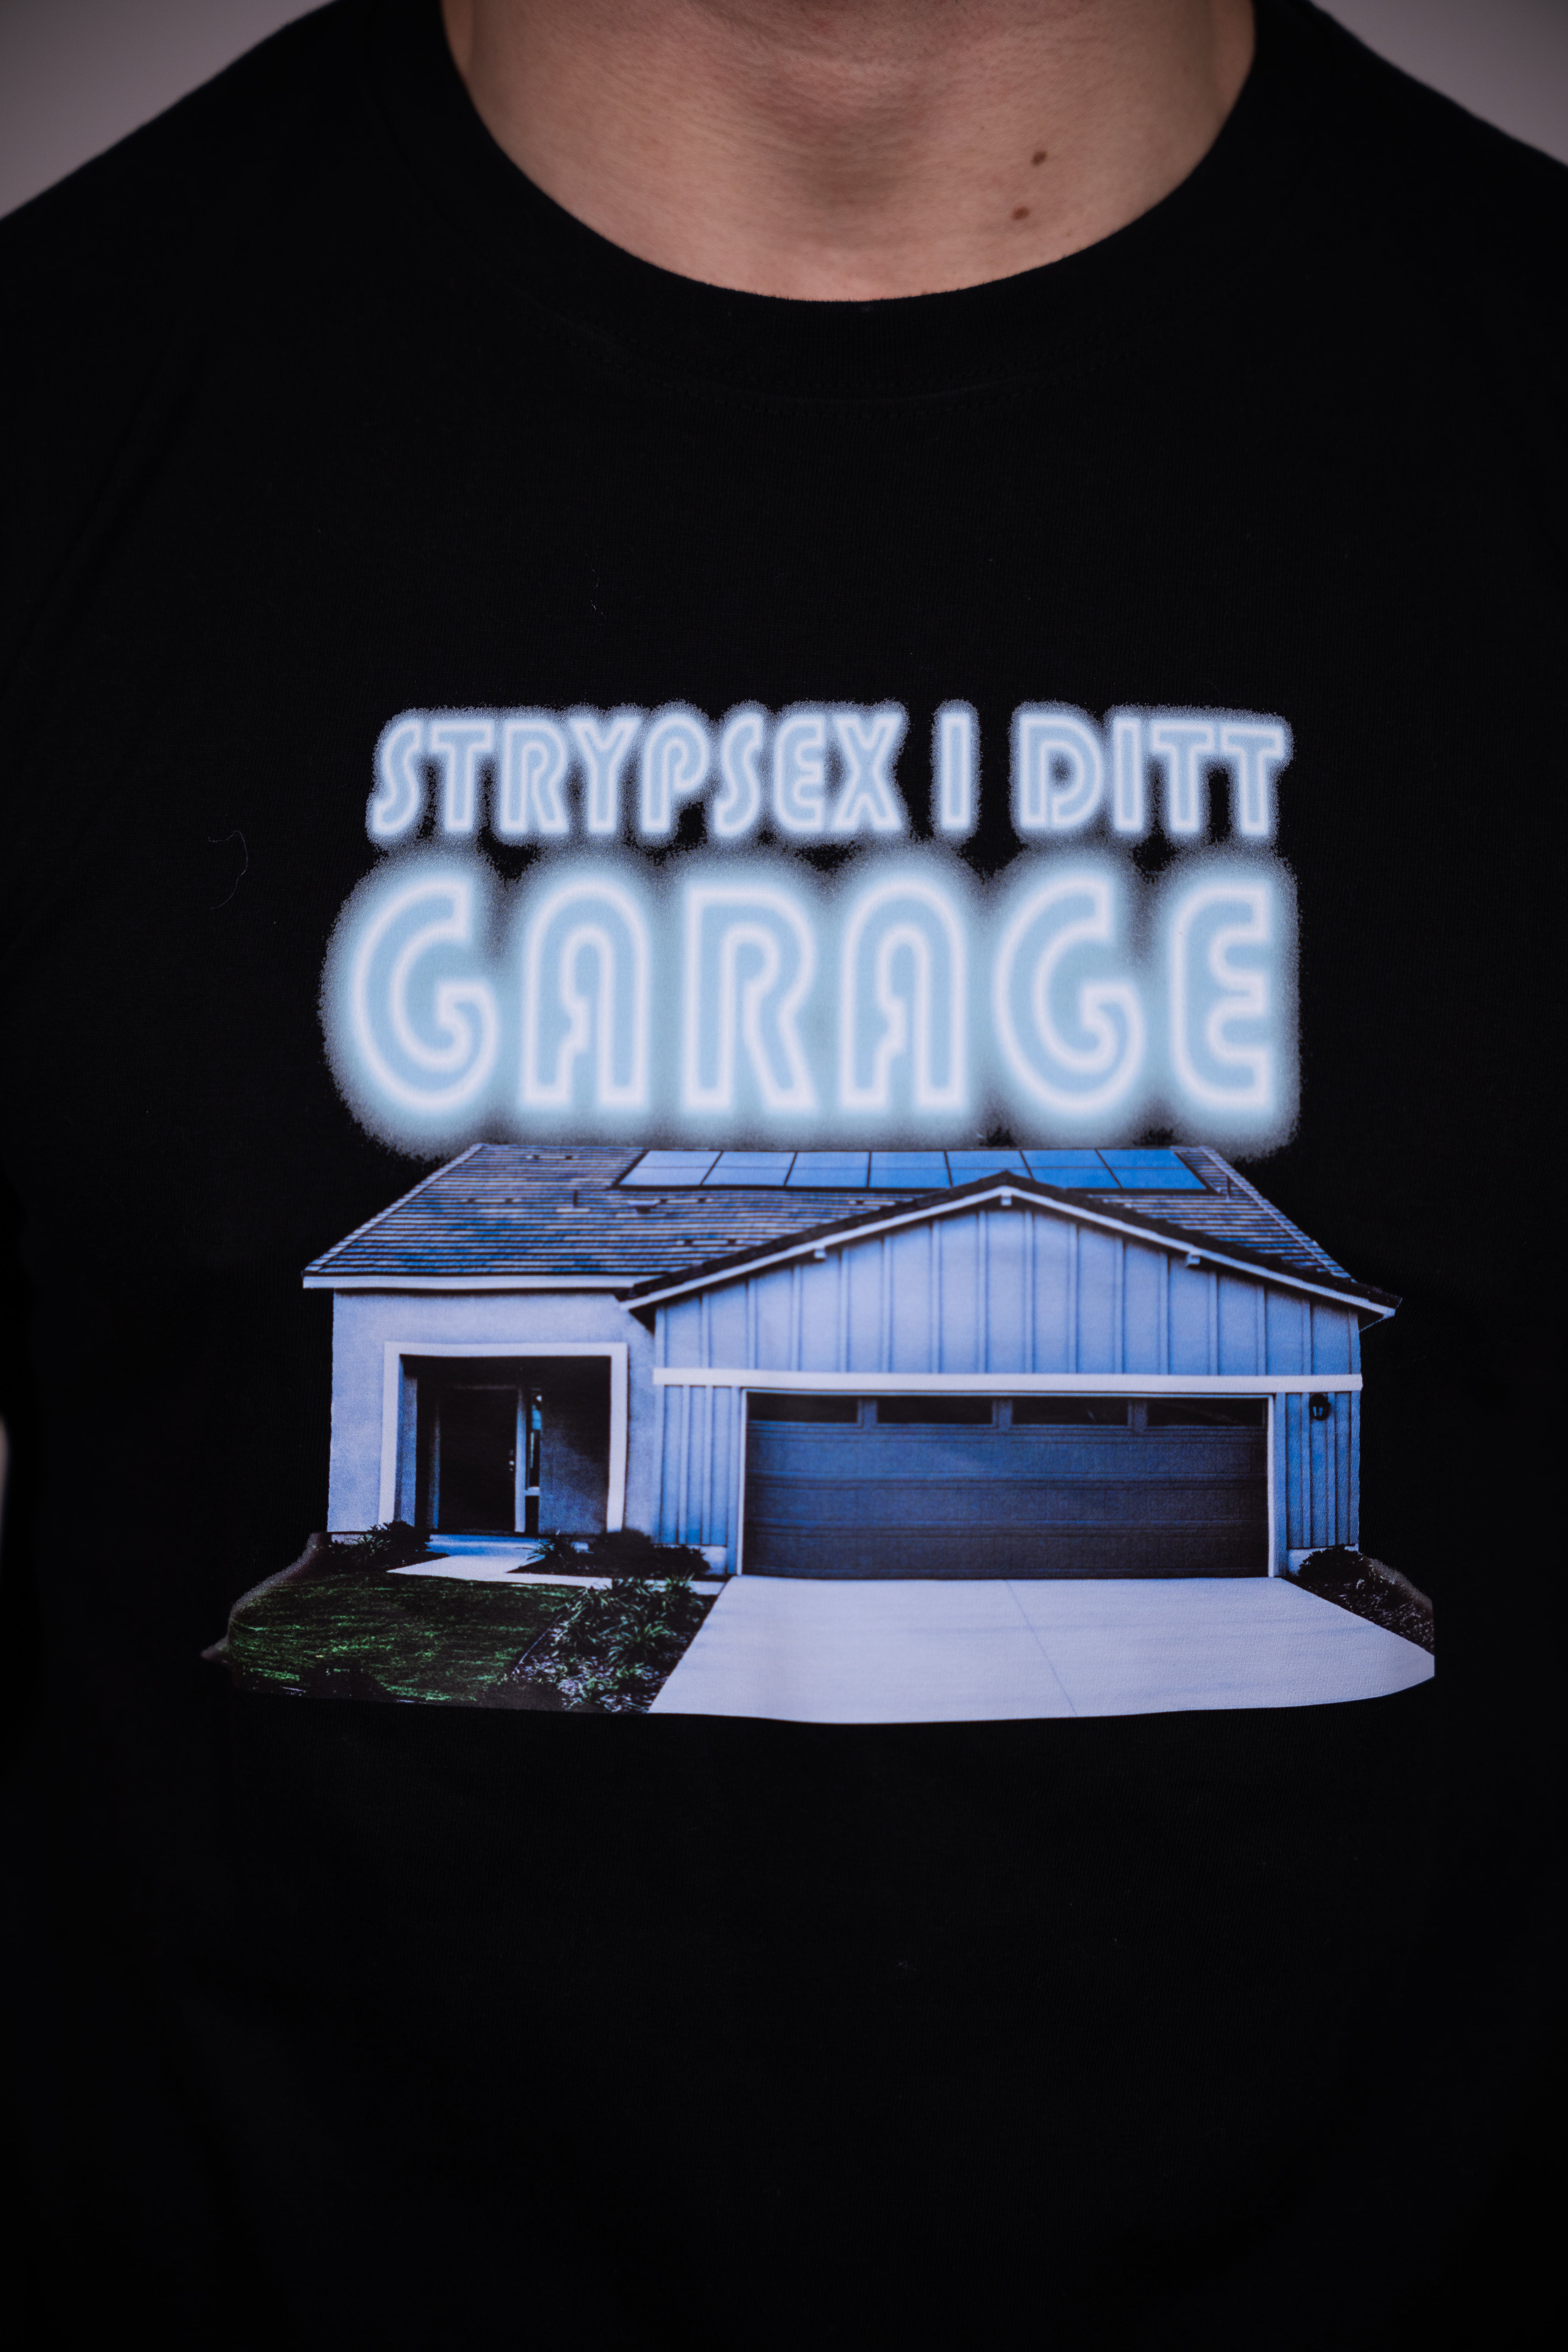 Strypsex i ditt garage T-shirt - Unisex